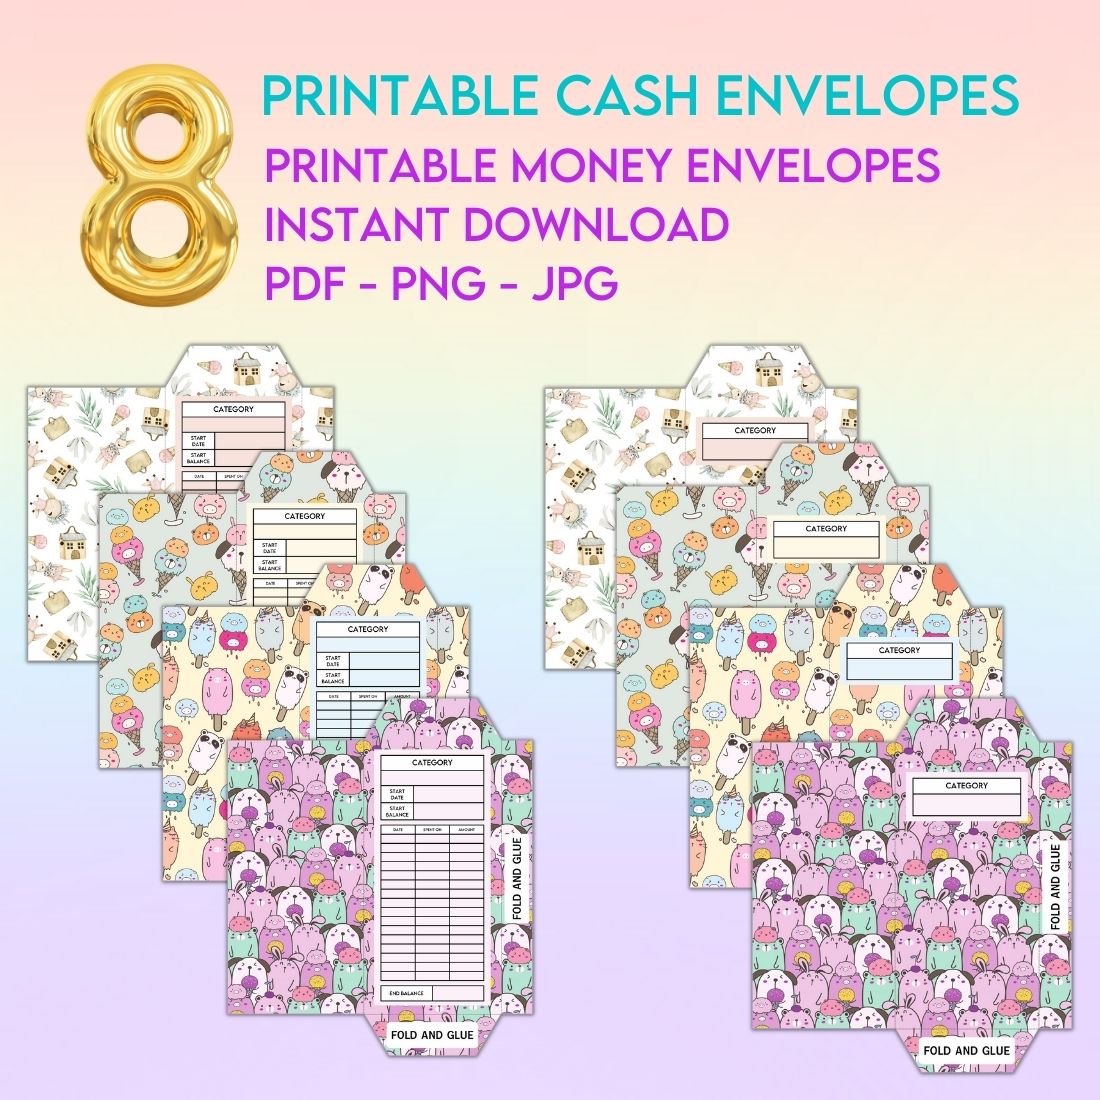 8 Printable Cash Envelopes #1 cover image.